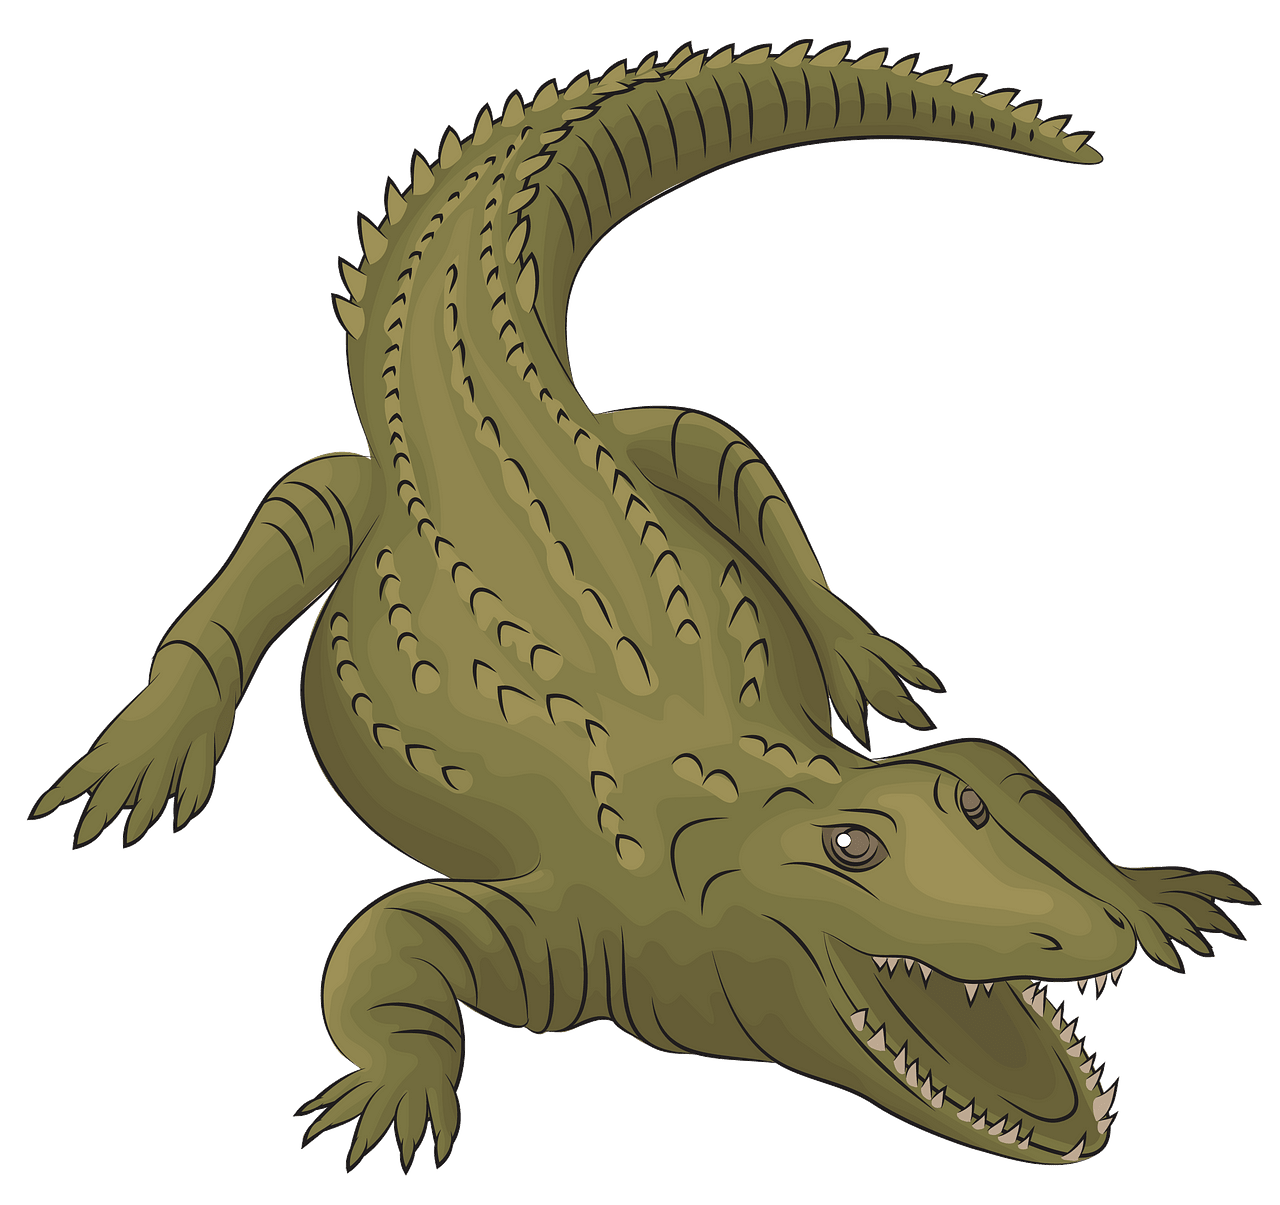 crocodile clipart nile crocodile